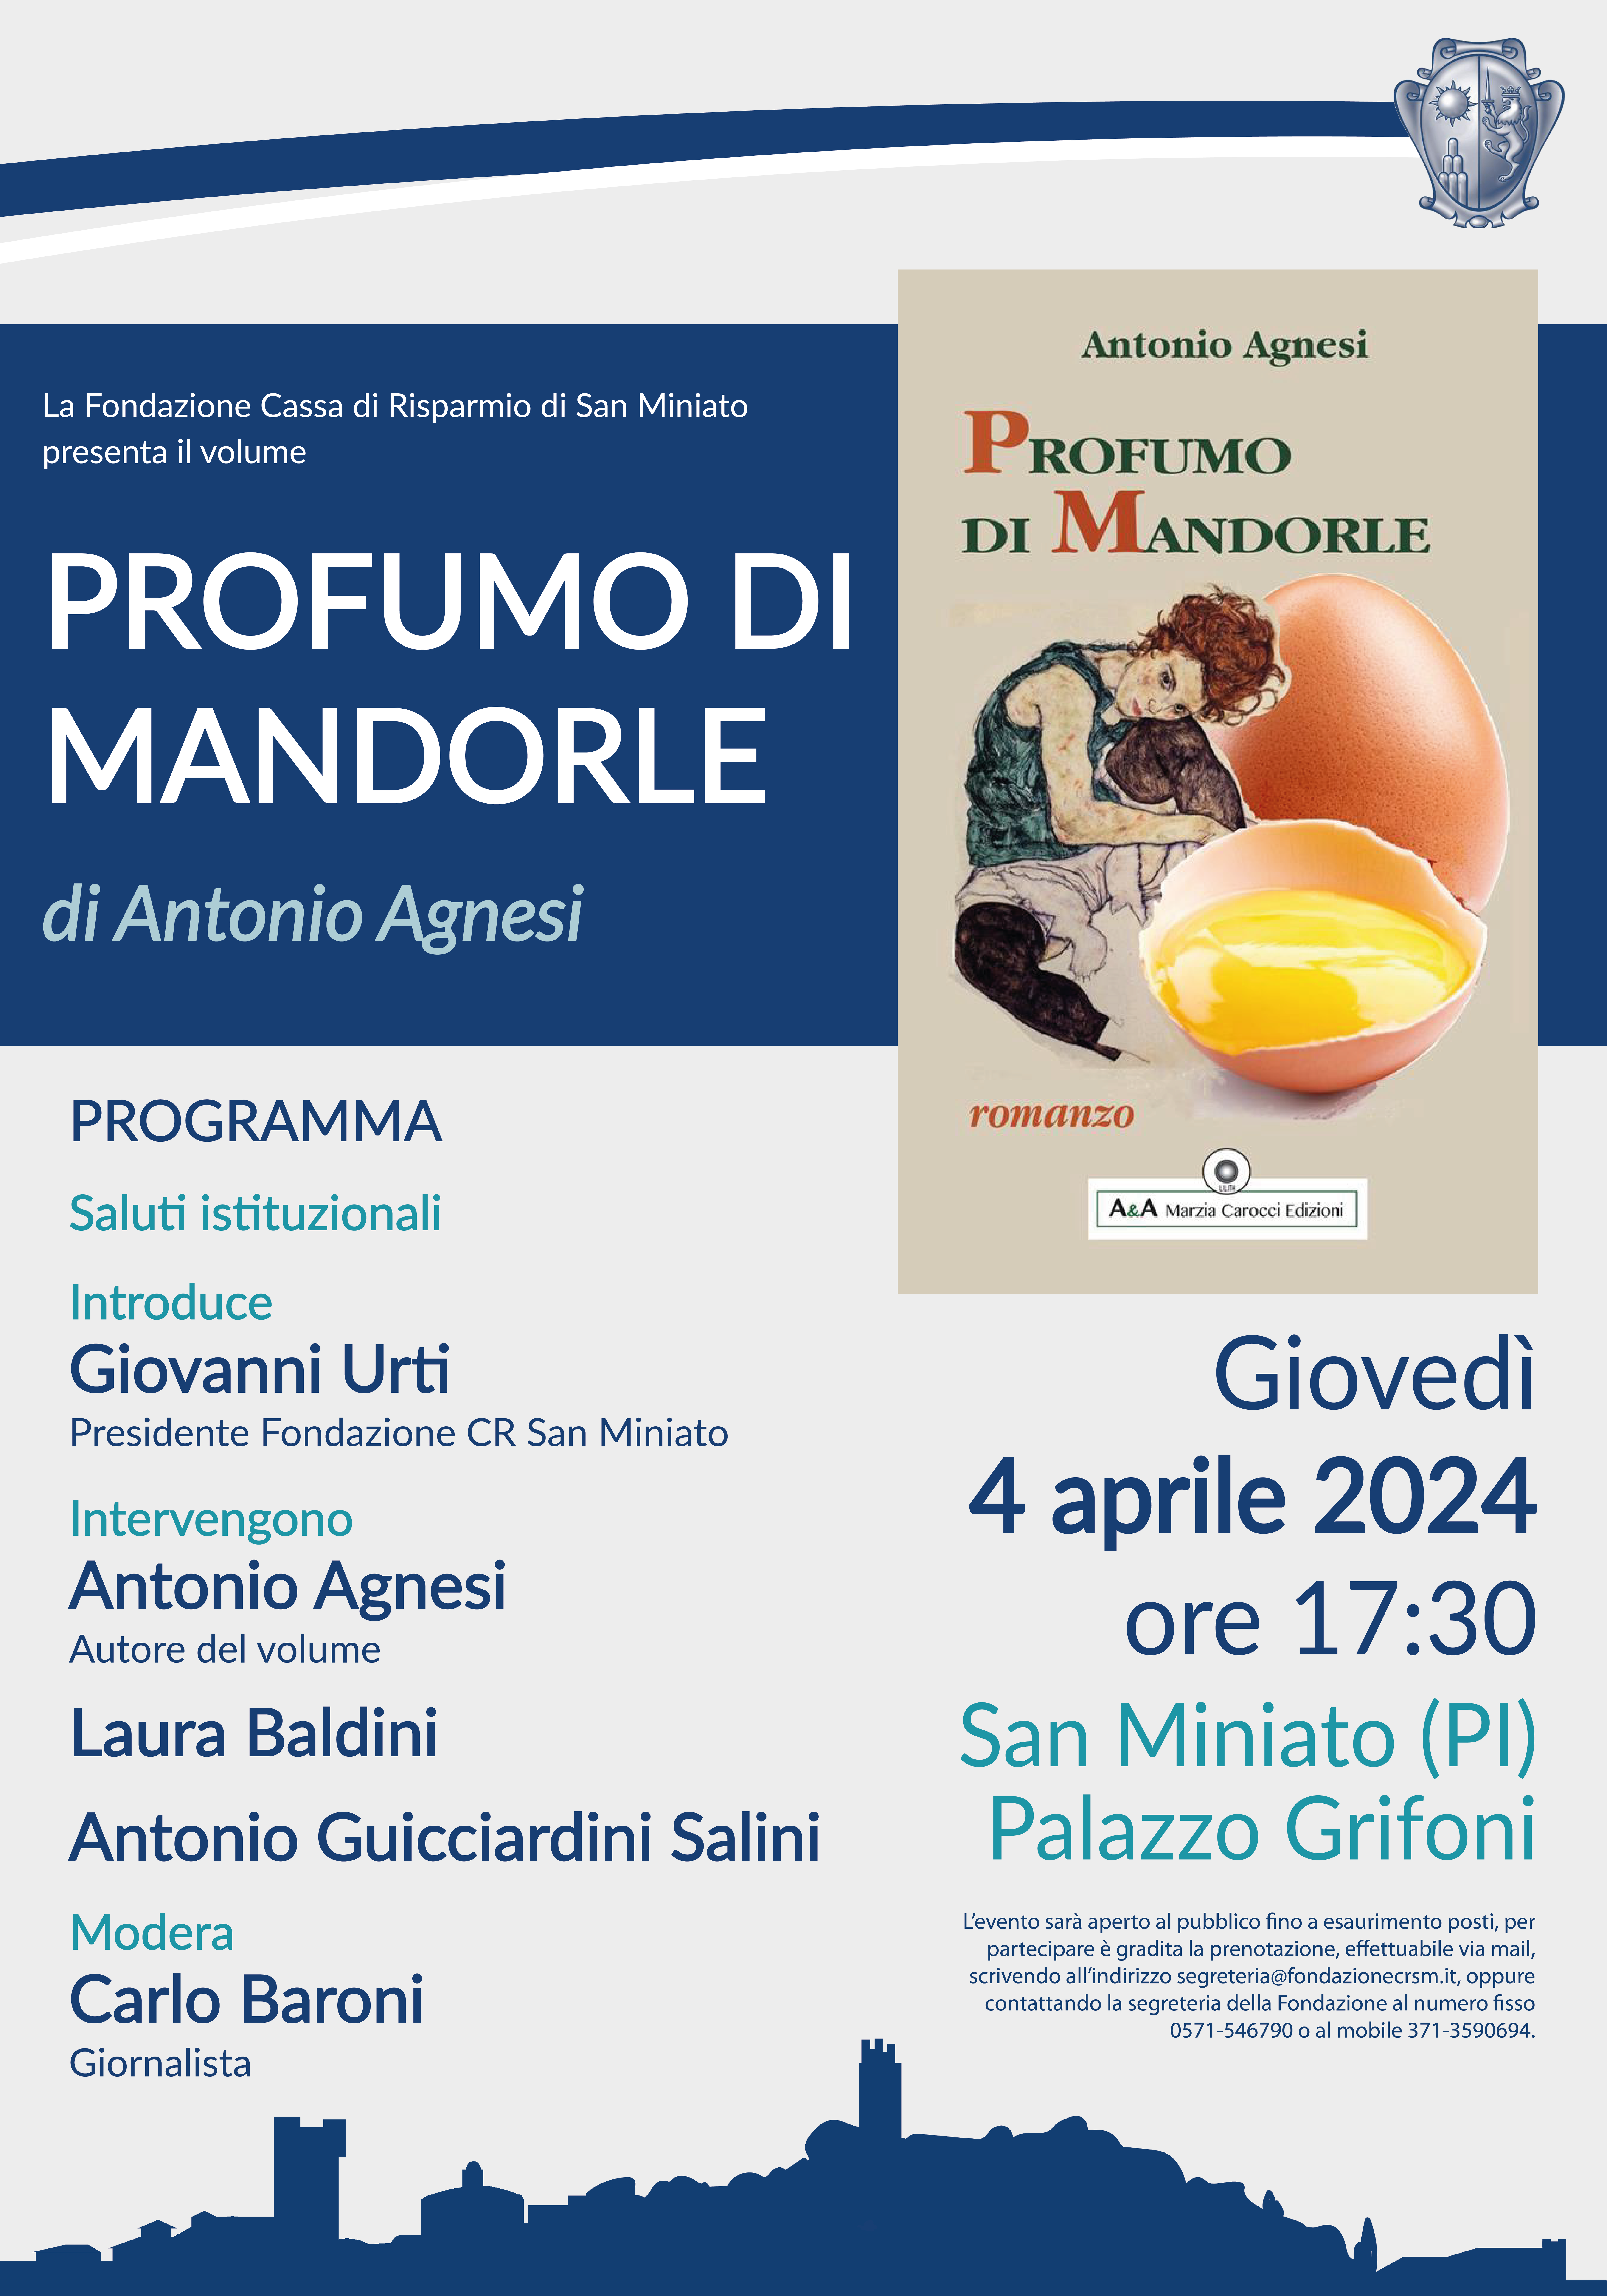 “PROFUMO DI MANDORLE” di Antonio Agnesi